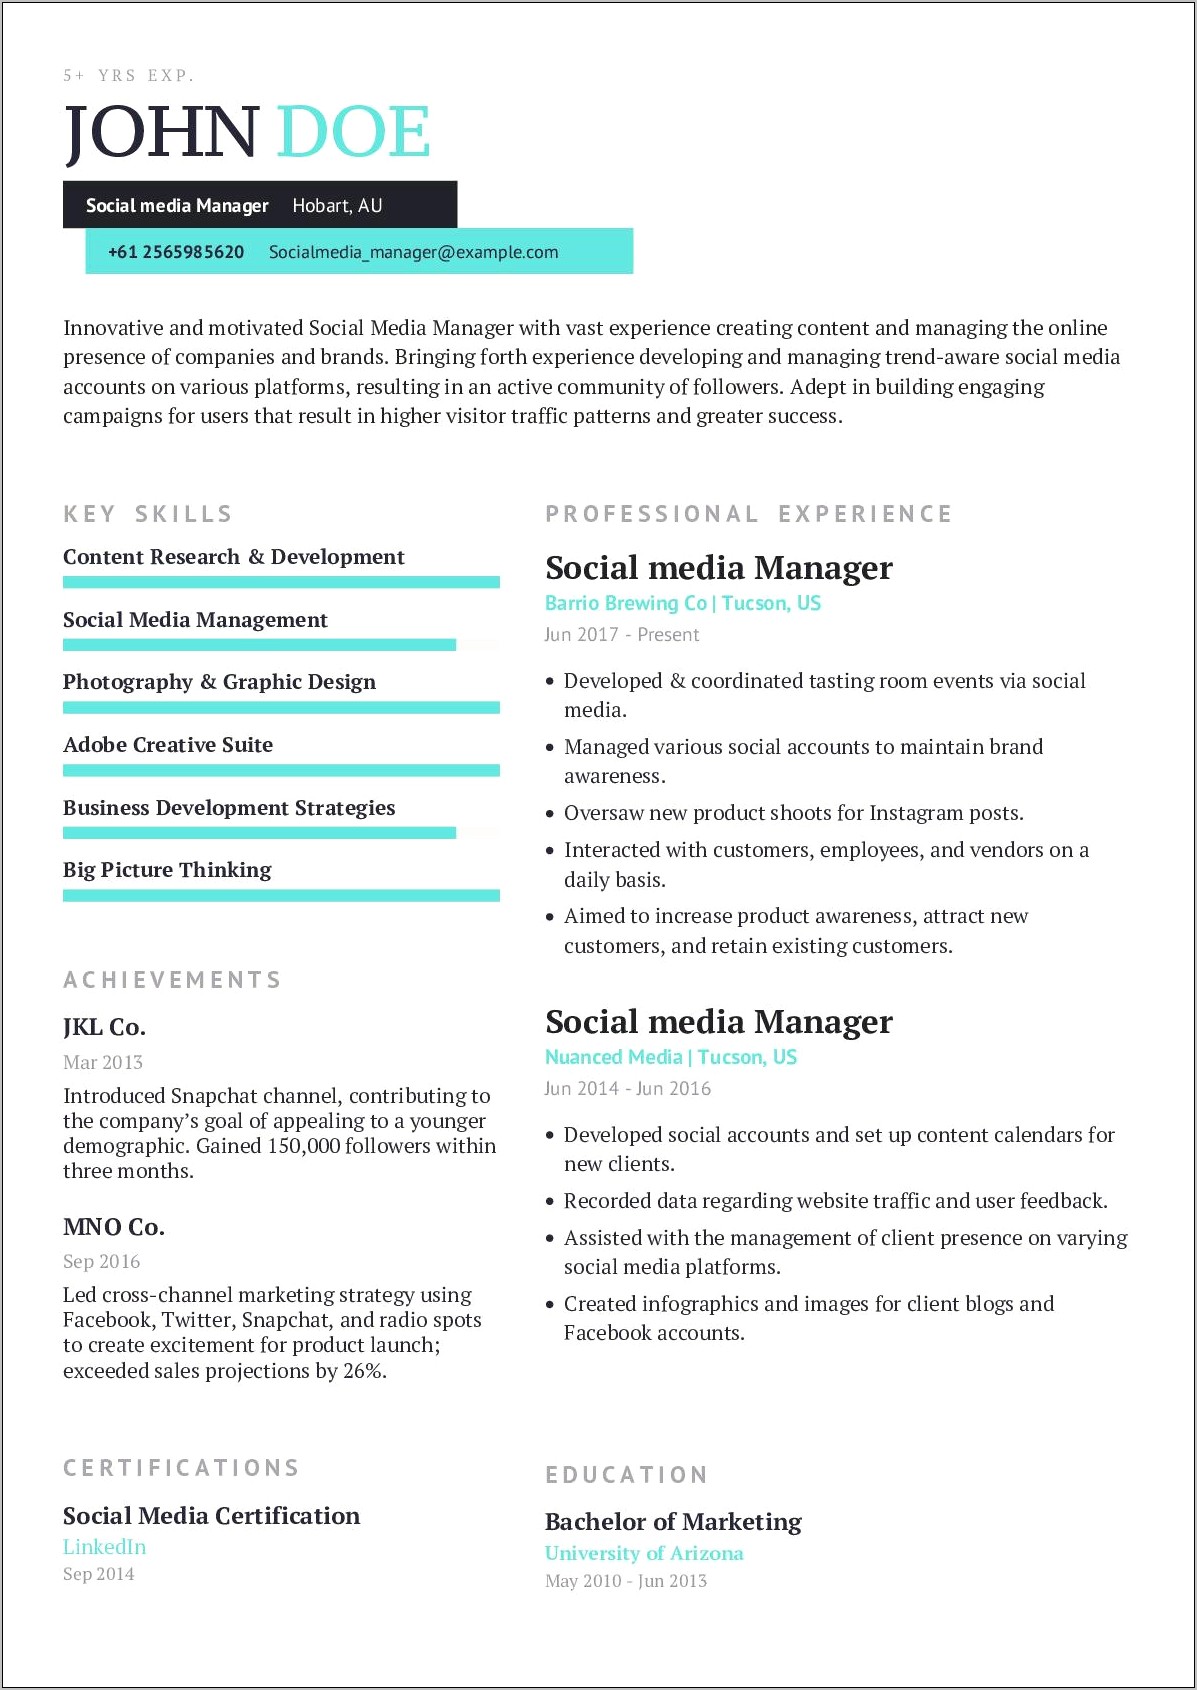 Resume For A Social Media Manager